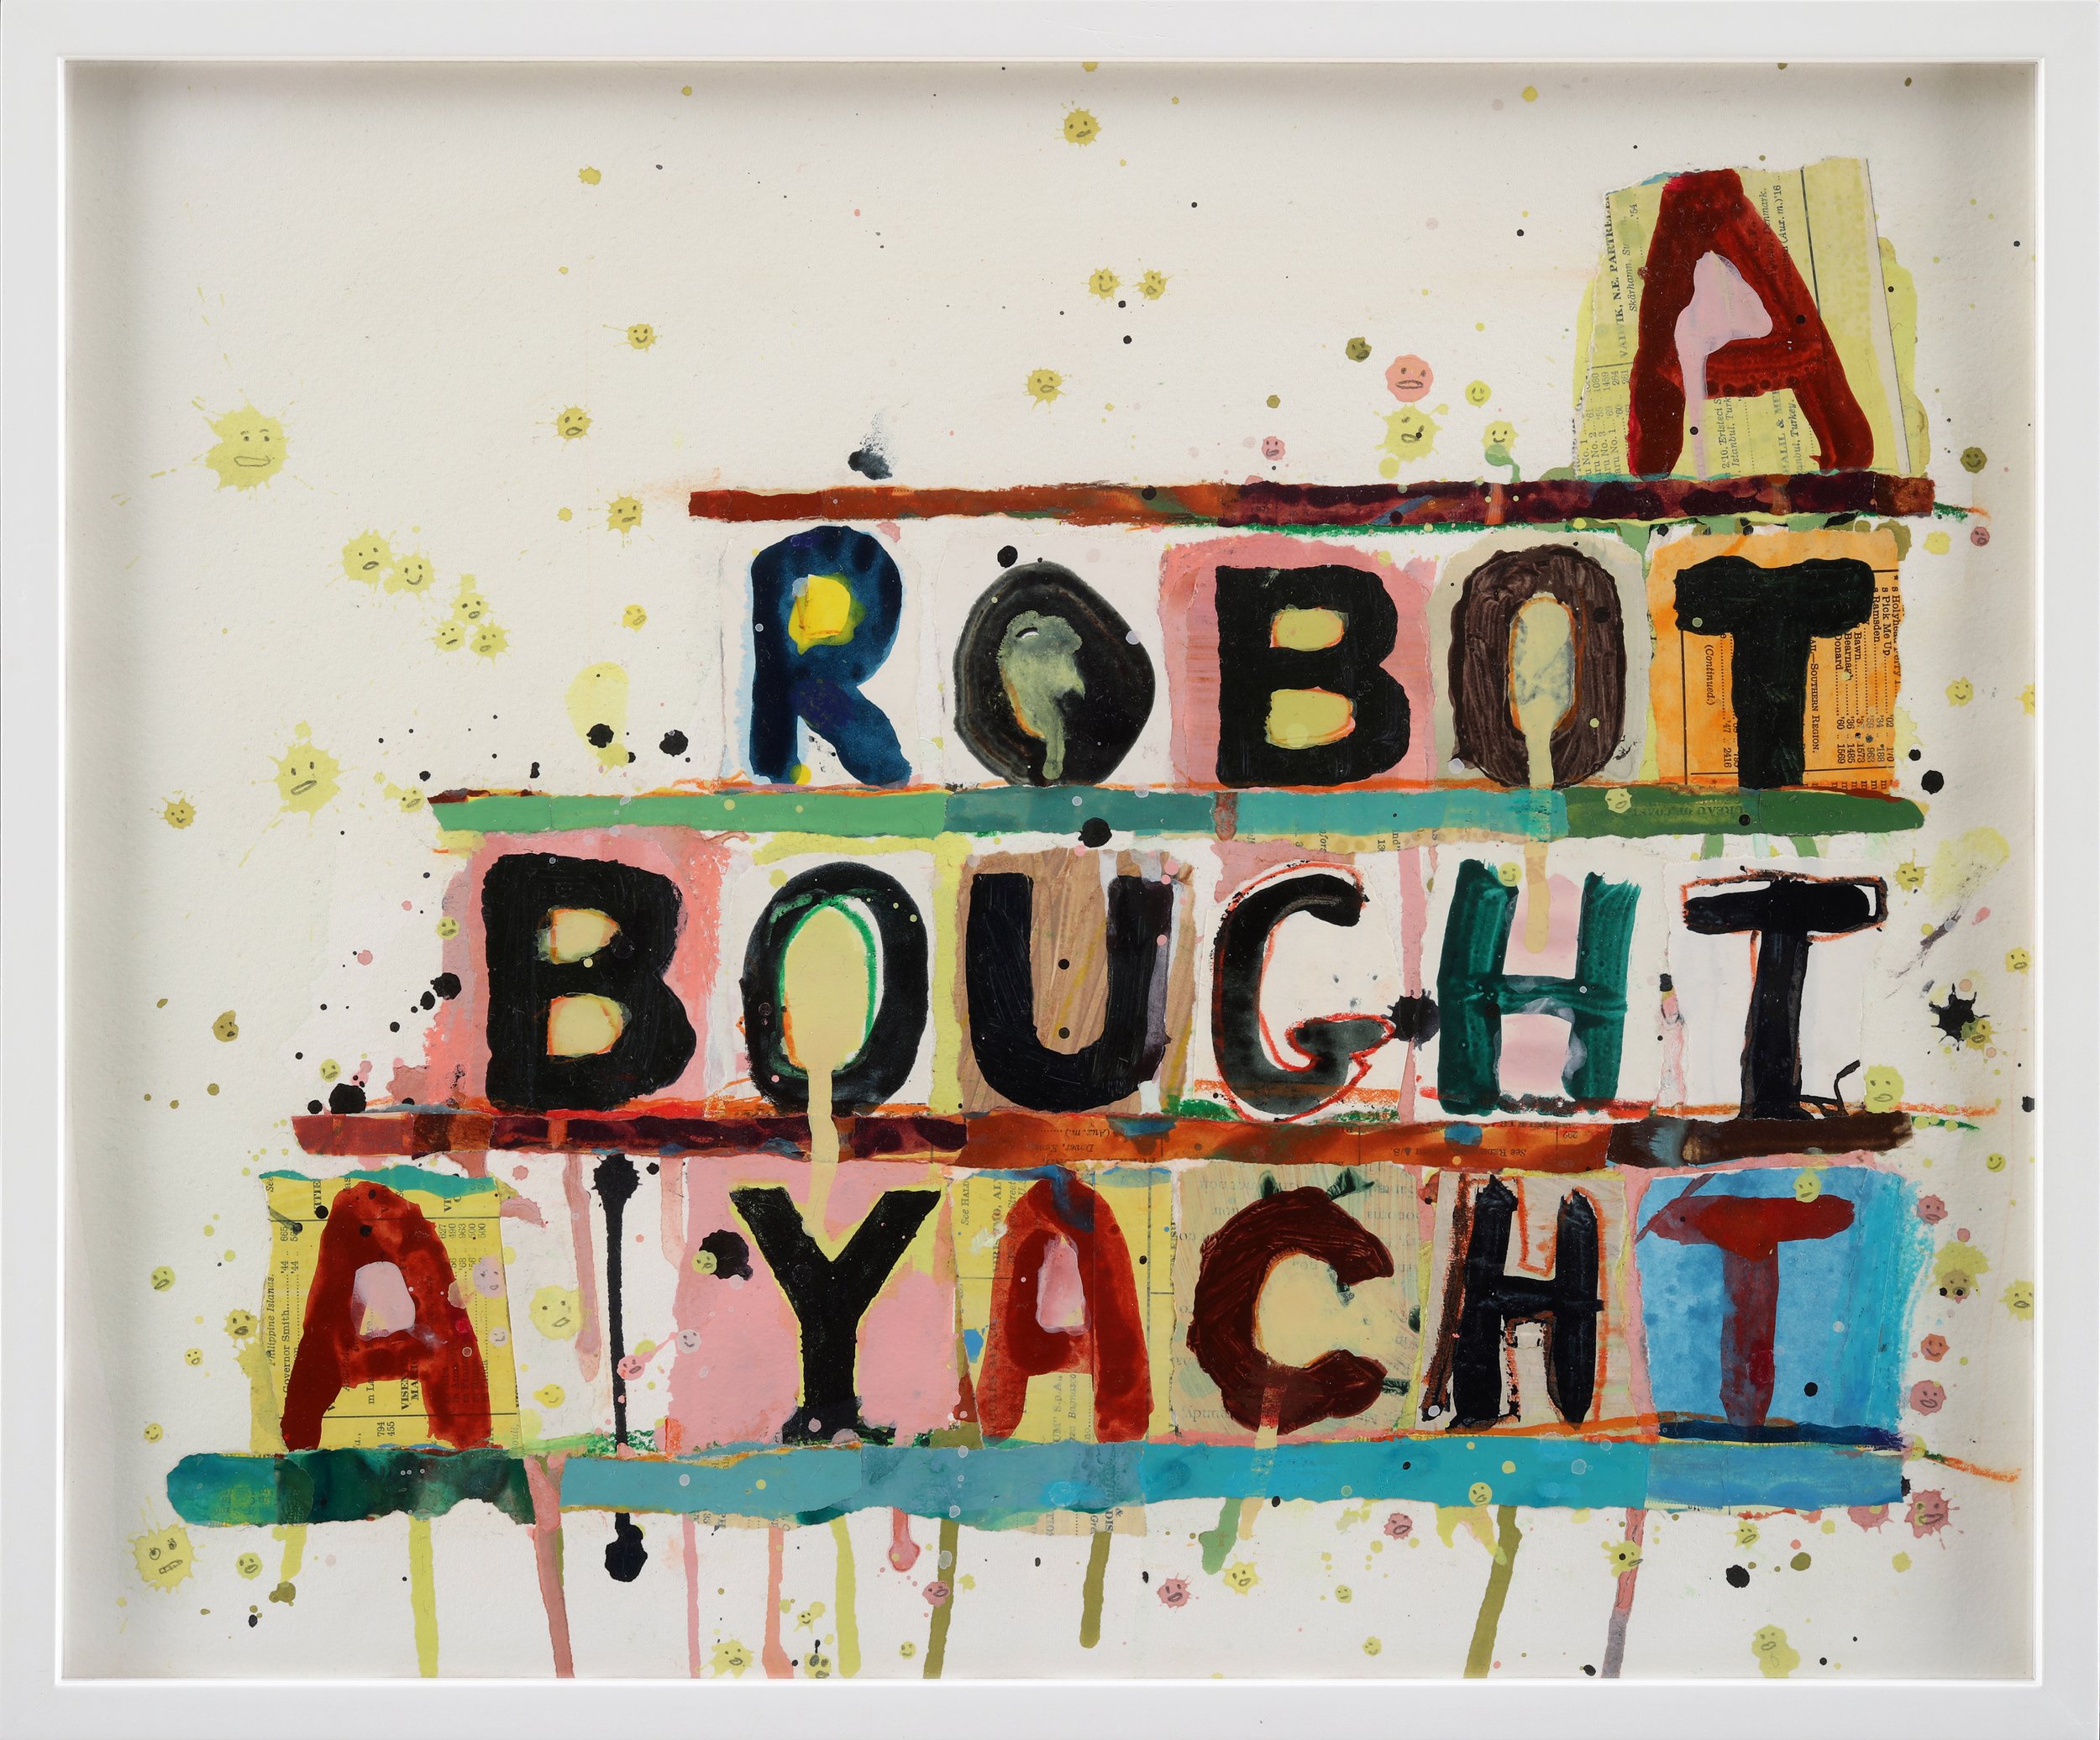 Robo-Yacht by Brian McDonald